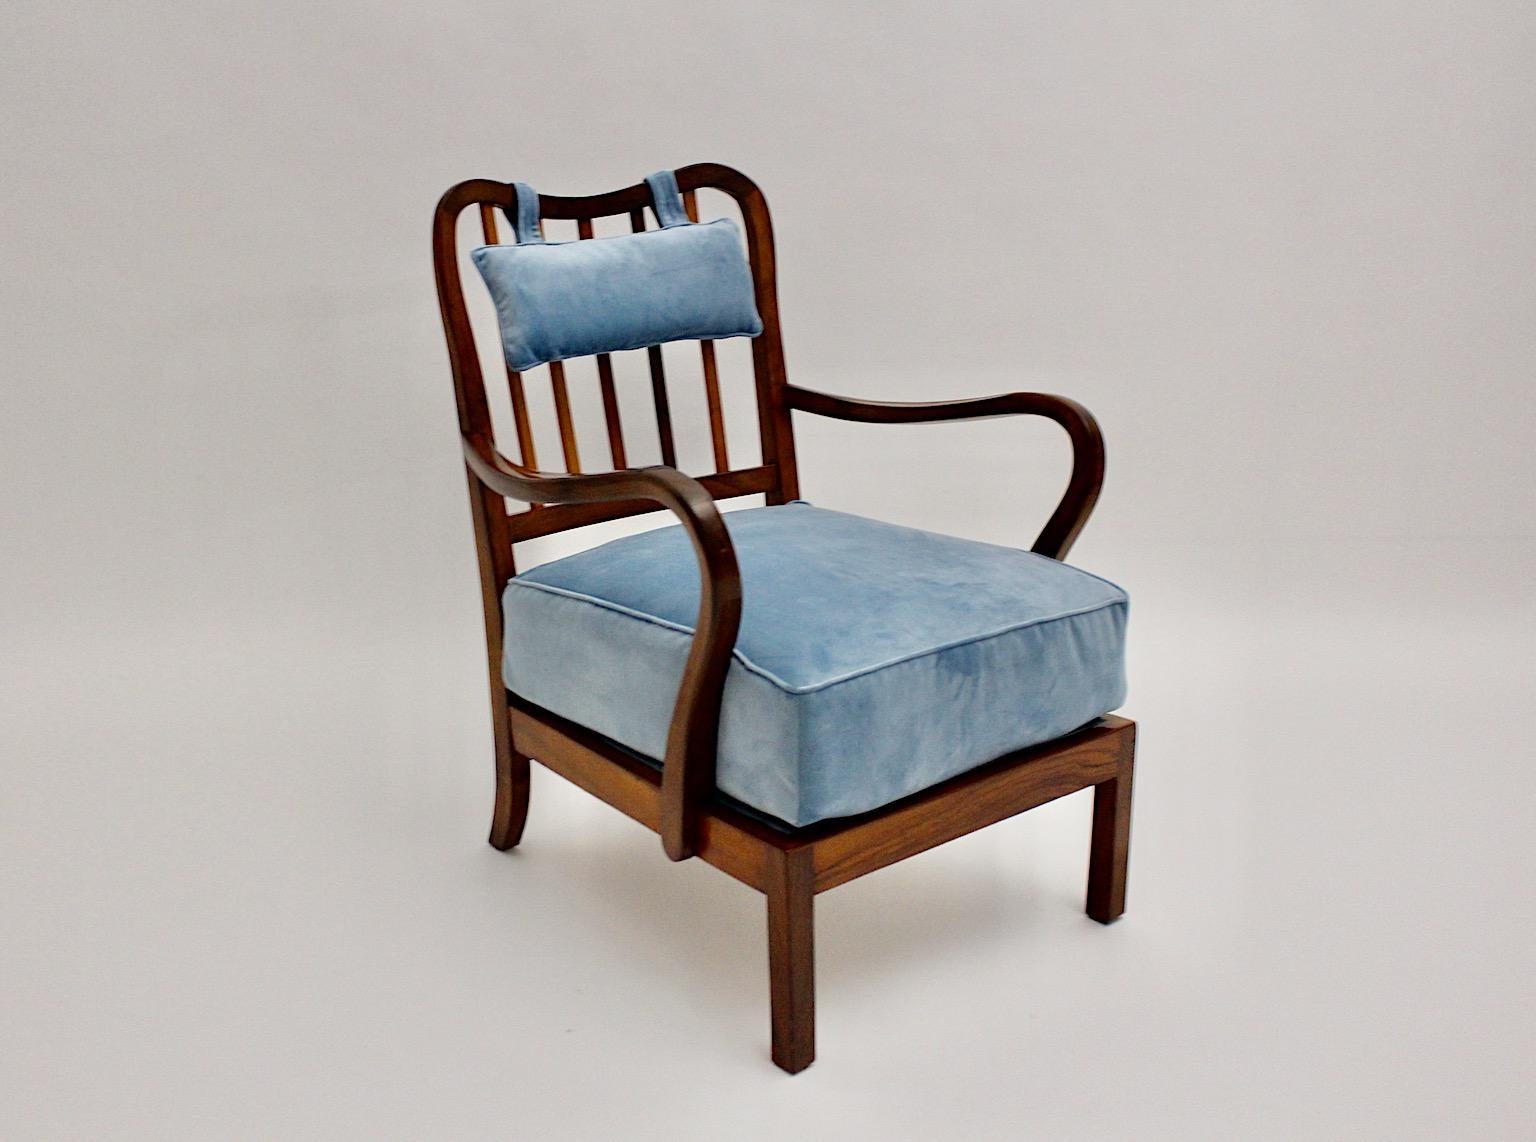 Art Deco Walnut Vintage Lounge Chair Armchair Attr. Oswald Haerdtl 1930s Vienna For Sale 5